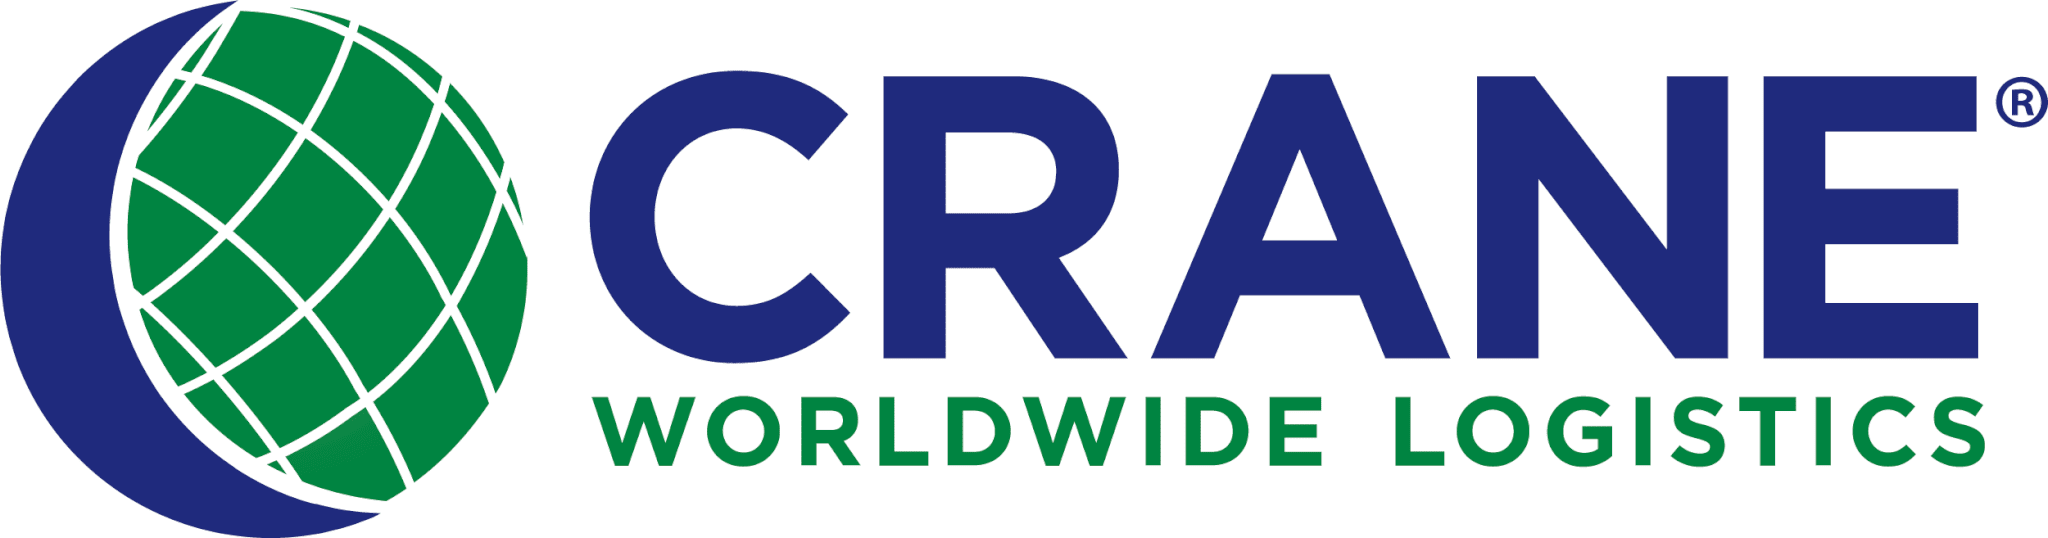 crane-worldwide-logistics-logo